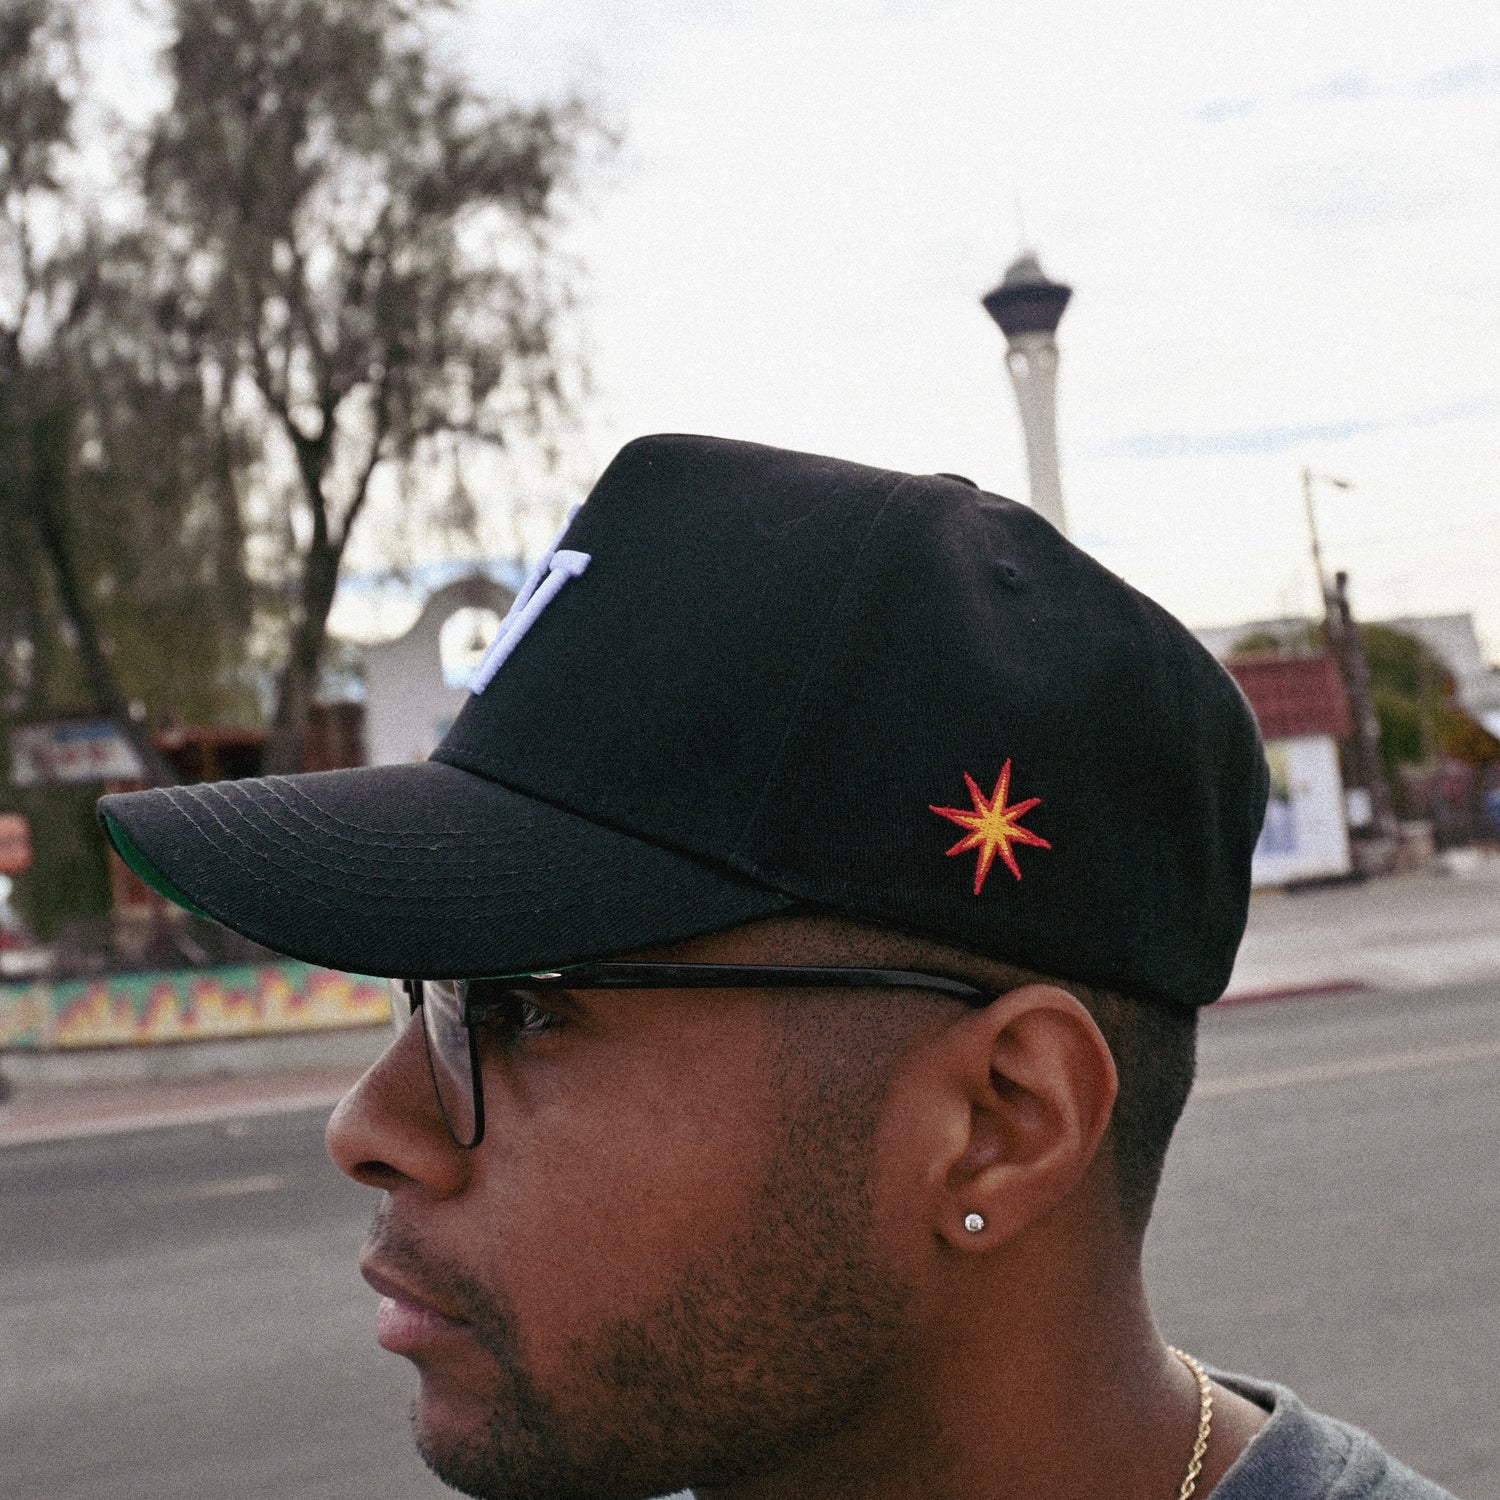  Las Vegas New Top Level Cross Sword Skyline Red Black Era  Snapback Hat Cap : Sports & Outdoors